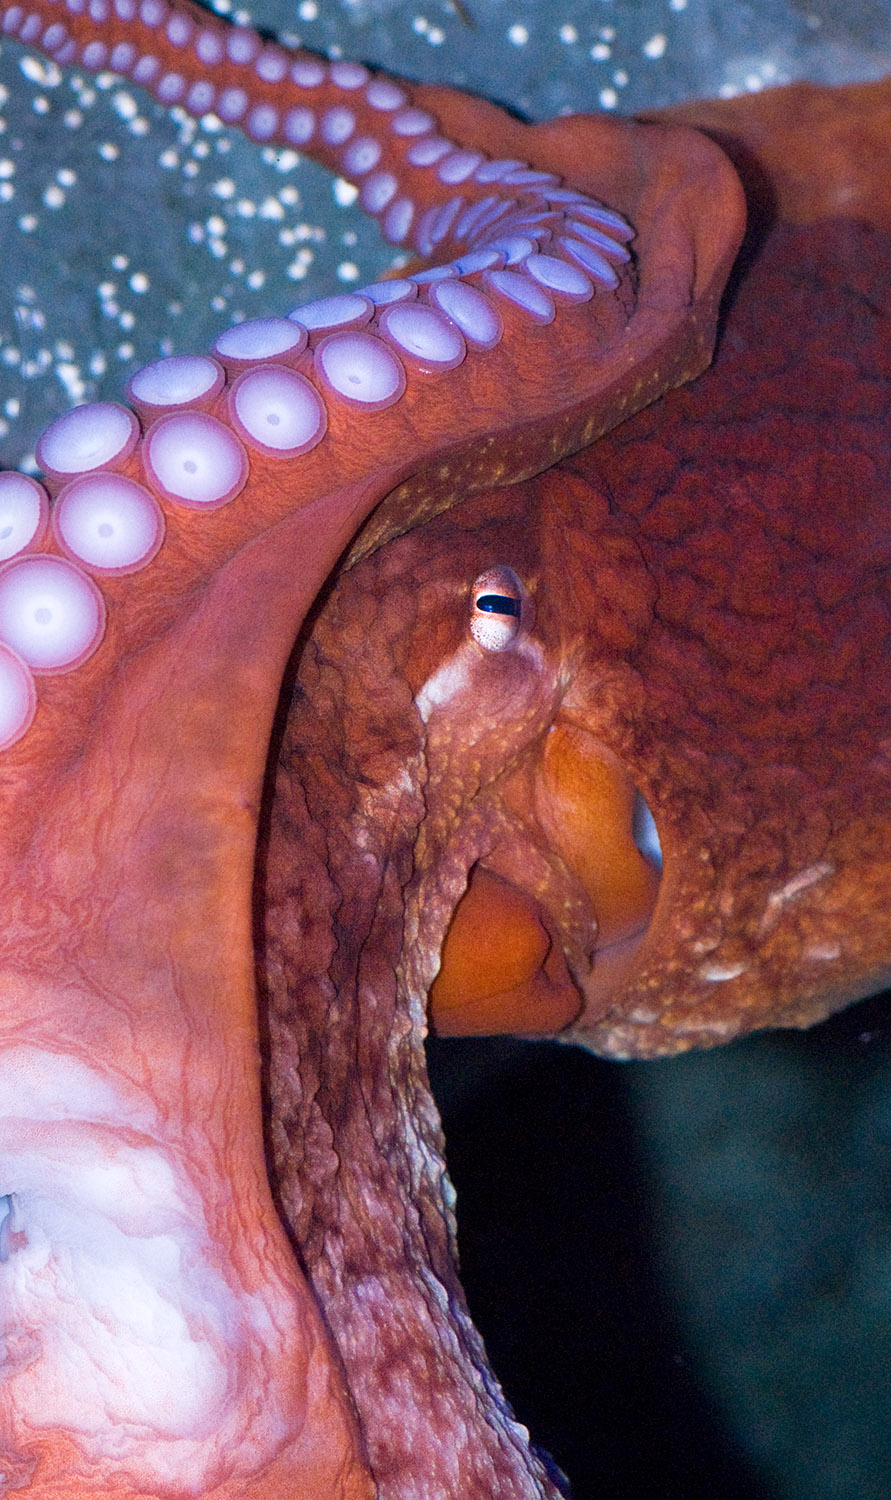 octopus-photo-image-021.jpg